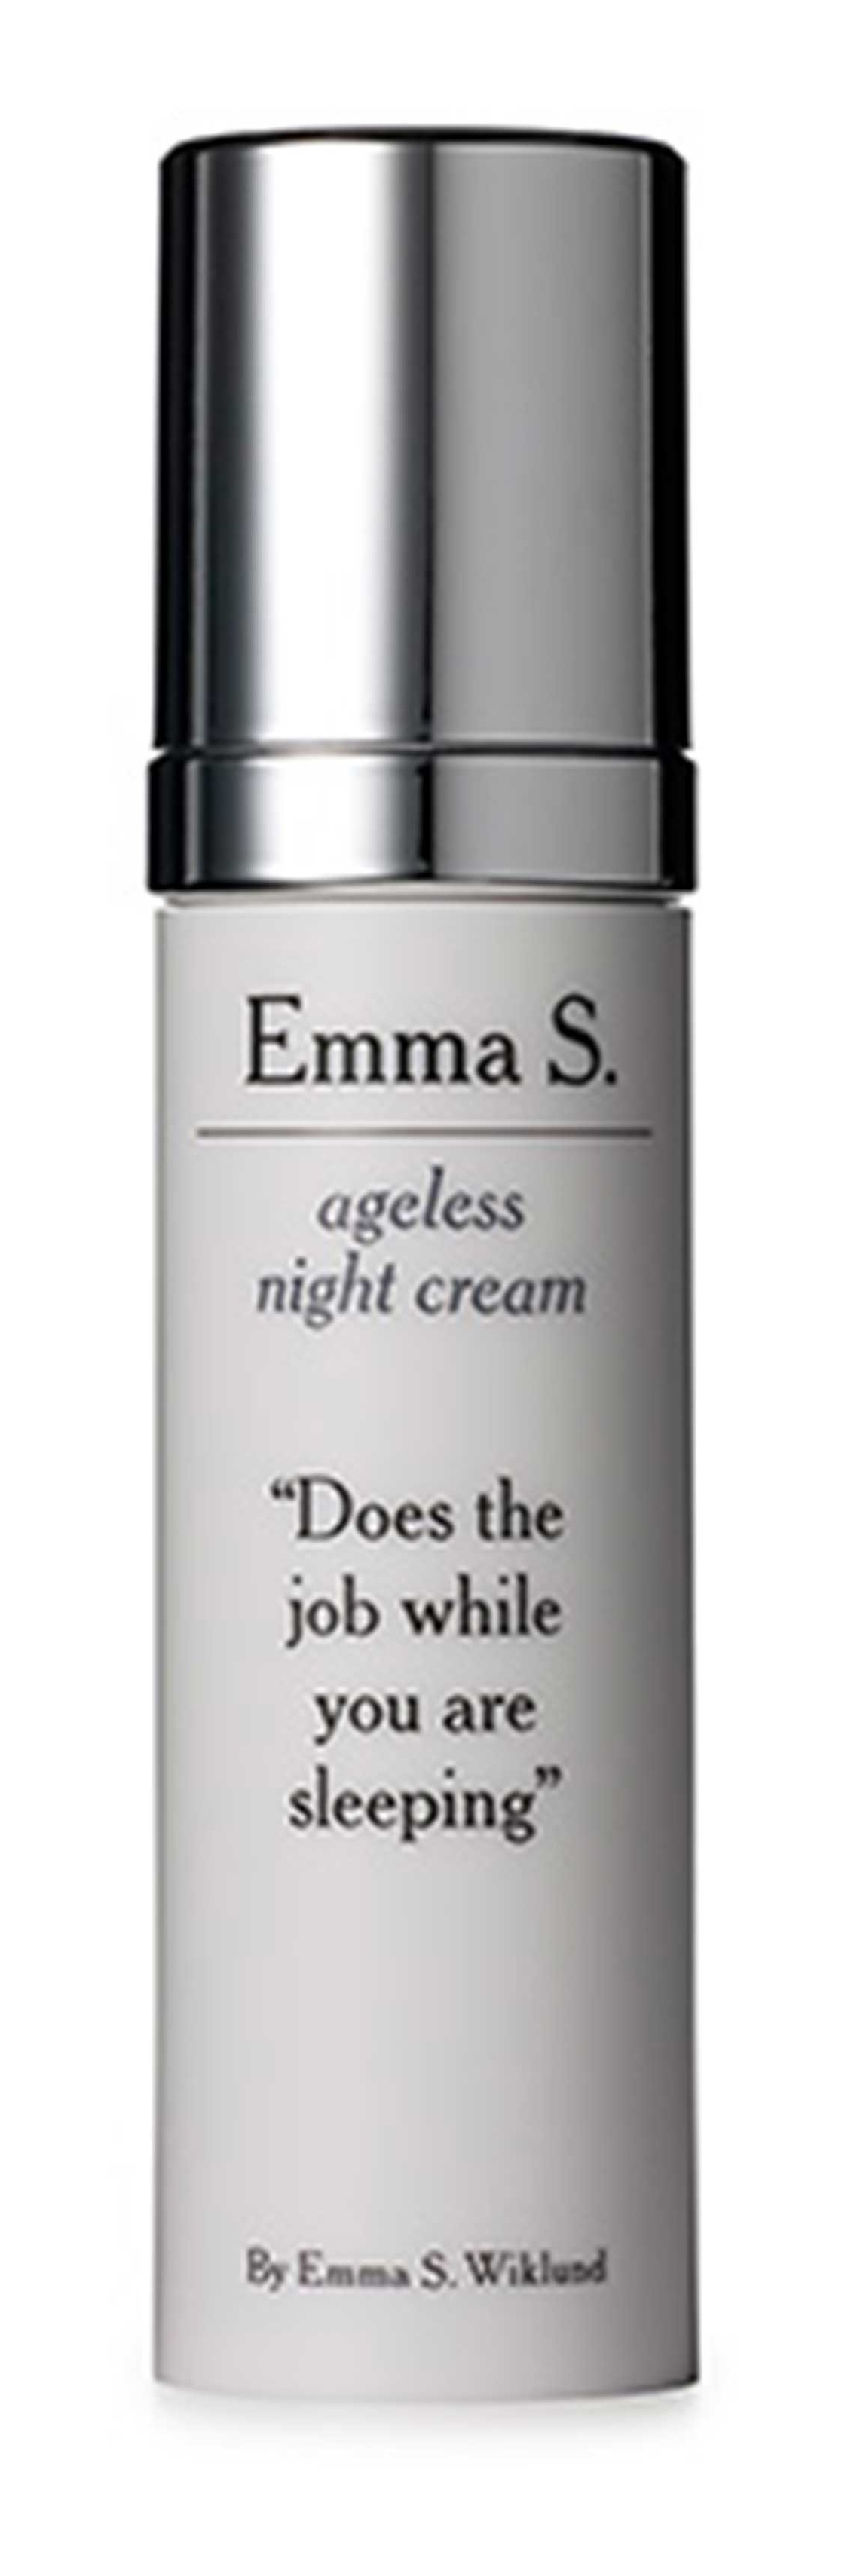 Emma S. Ageless Night Cream